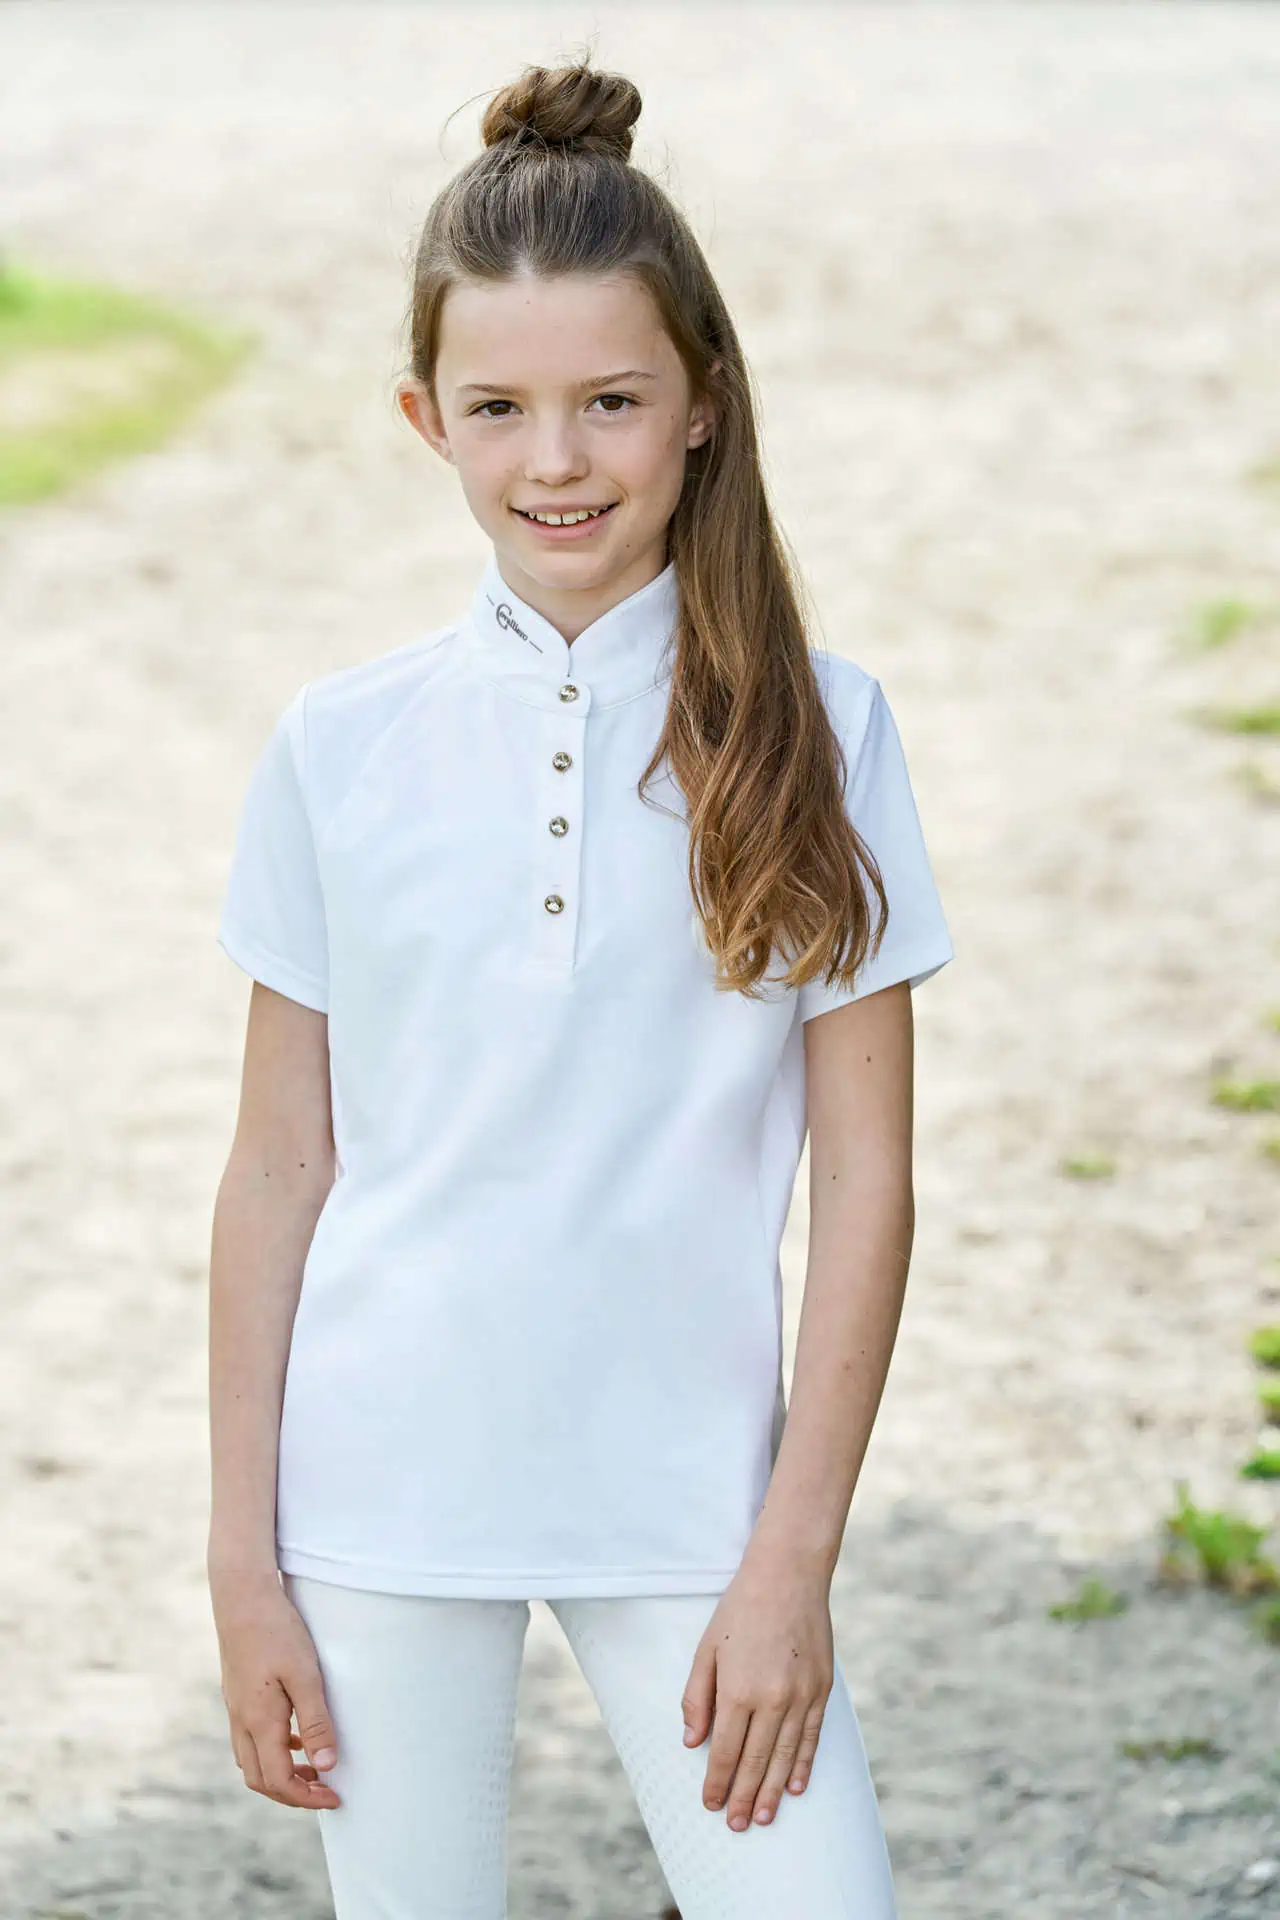 Competition Shirt Goldana Kinder, white, 140/146